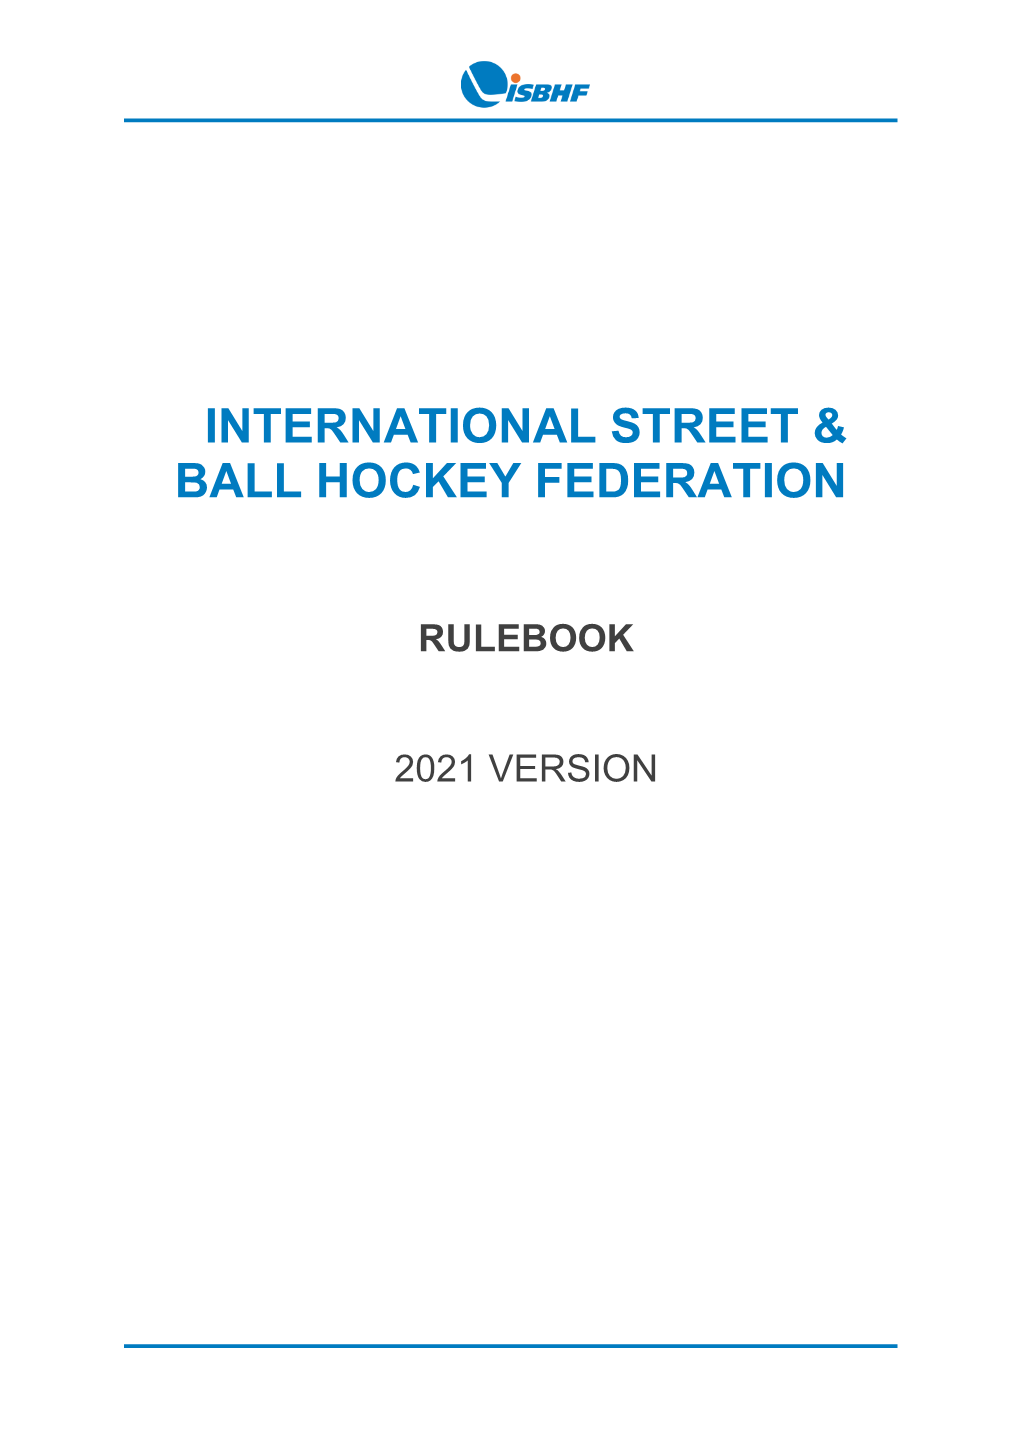 International Street & Ball Hockey Federation